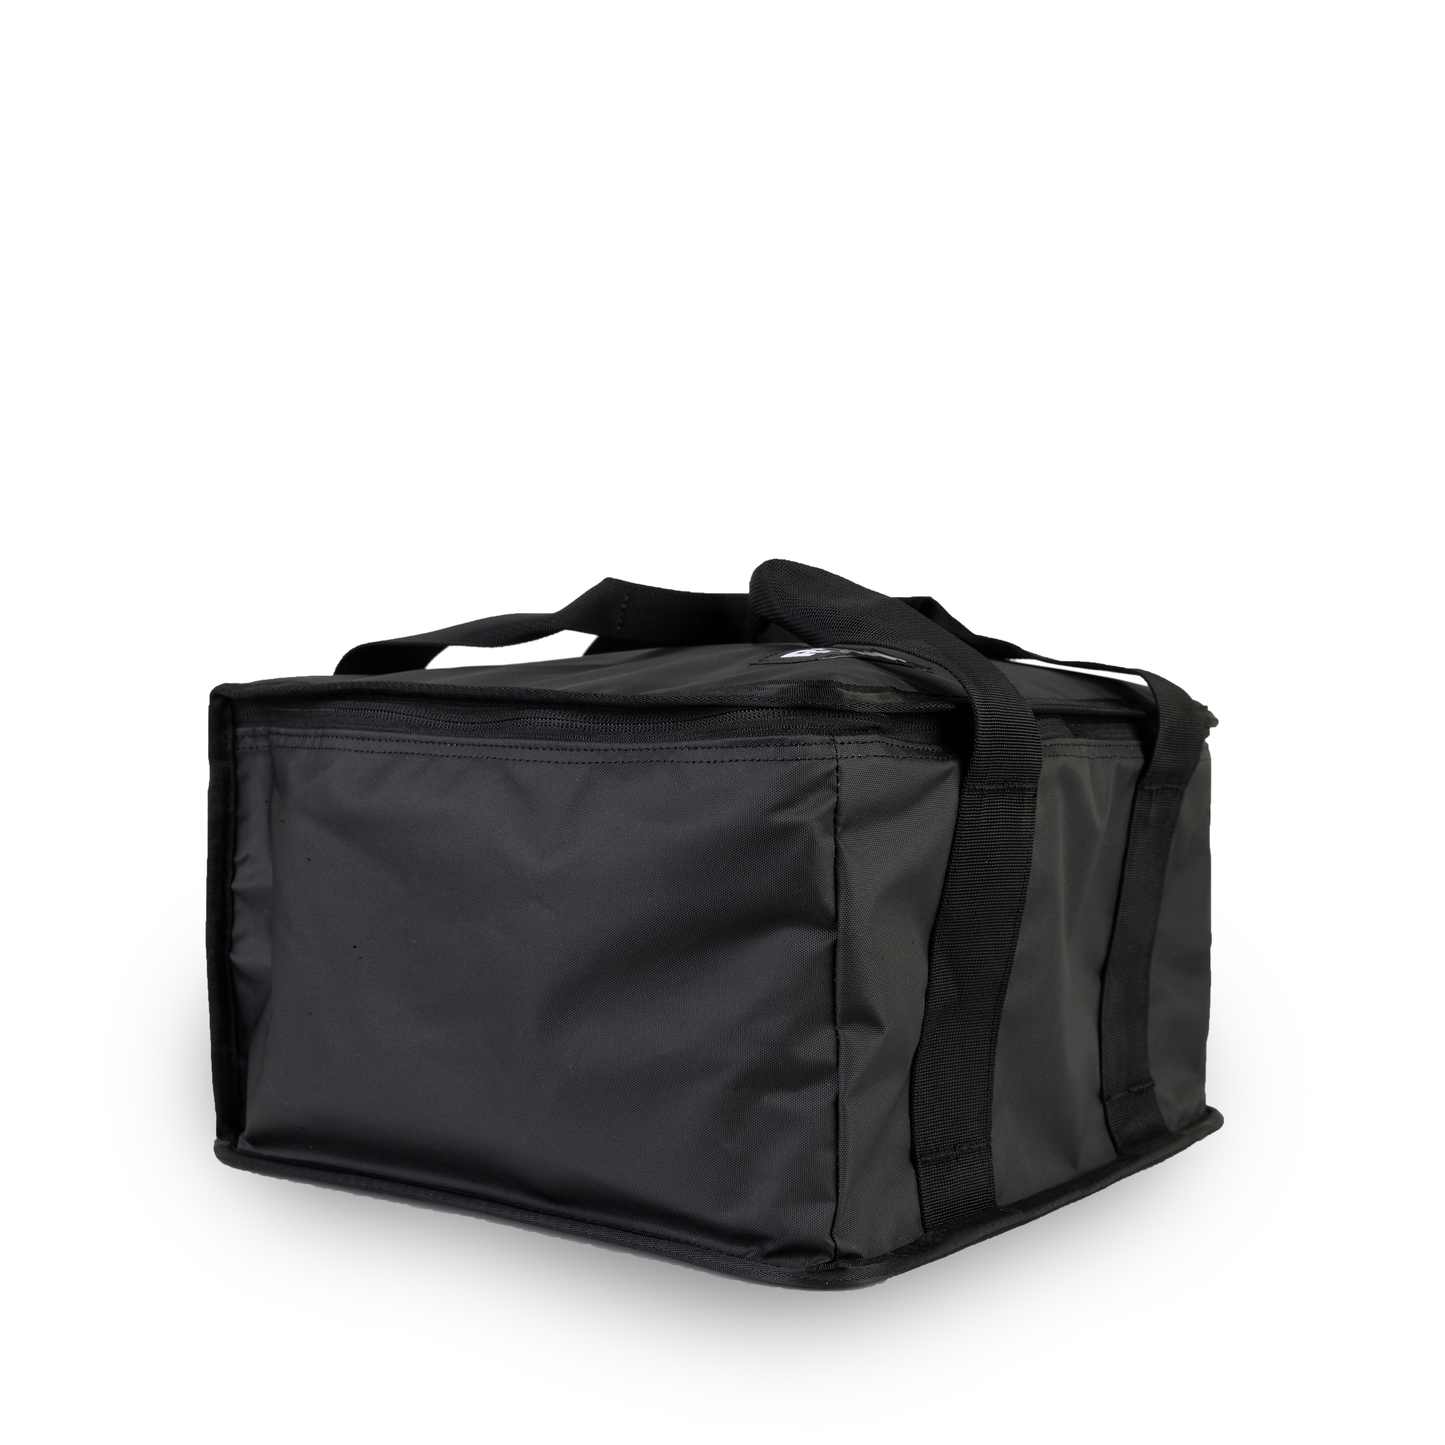 Rugged Bag 1.2 by ROAM Adventure Co.